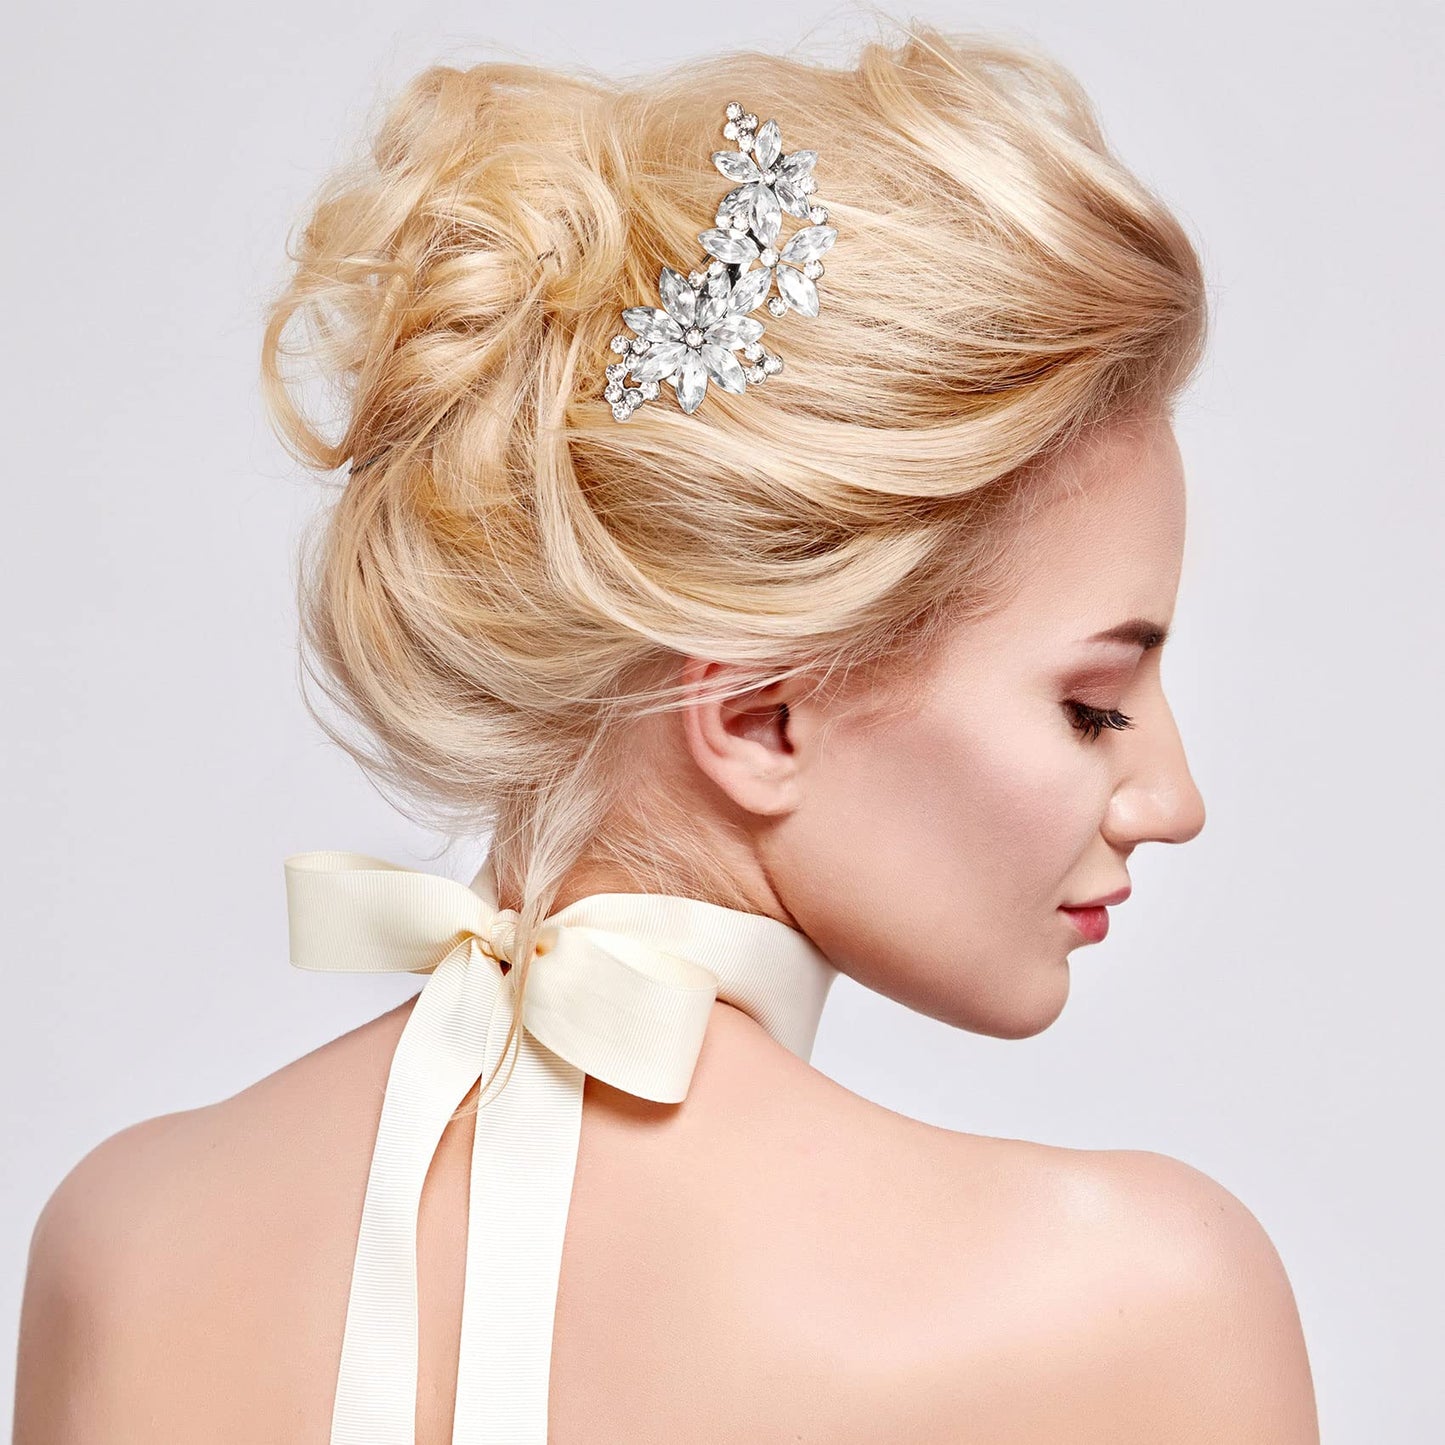 PAGOW 4Pcs Crystal Flower Bridal Hair Clips, Silver Bride Wedding Hair Accessories Hair Pins, Rhinestone Flower Wedding Headpiece for Brides Women Girls